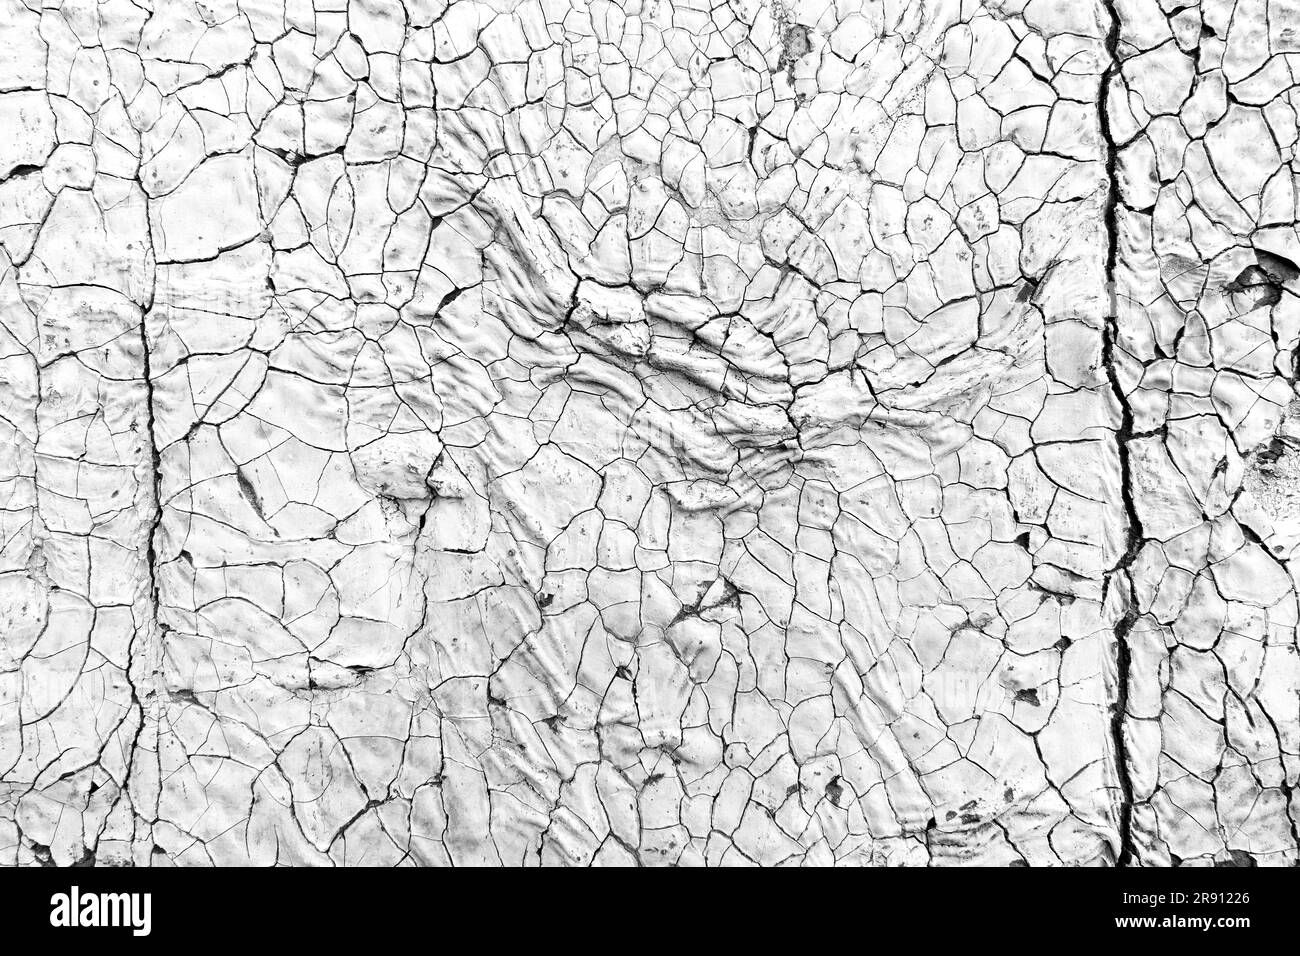 Cracked  surface - grunge texture Stock Photo